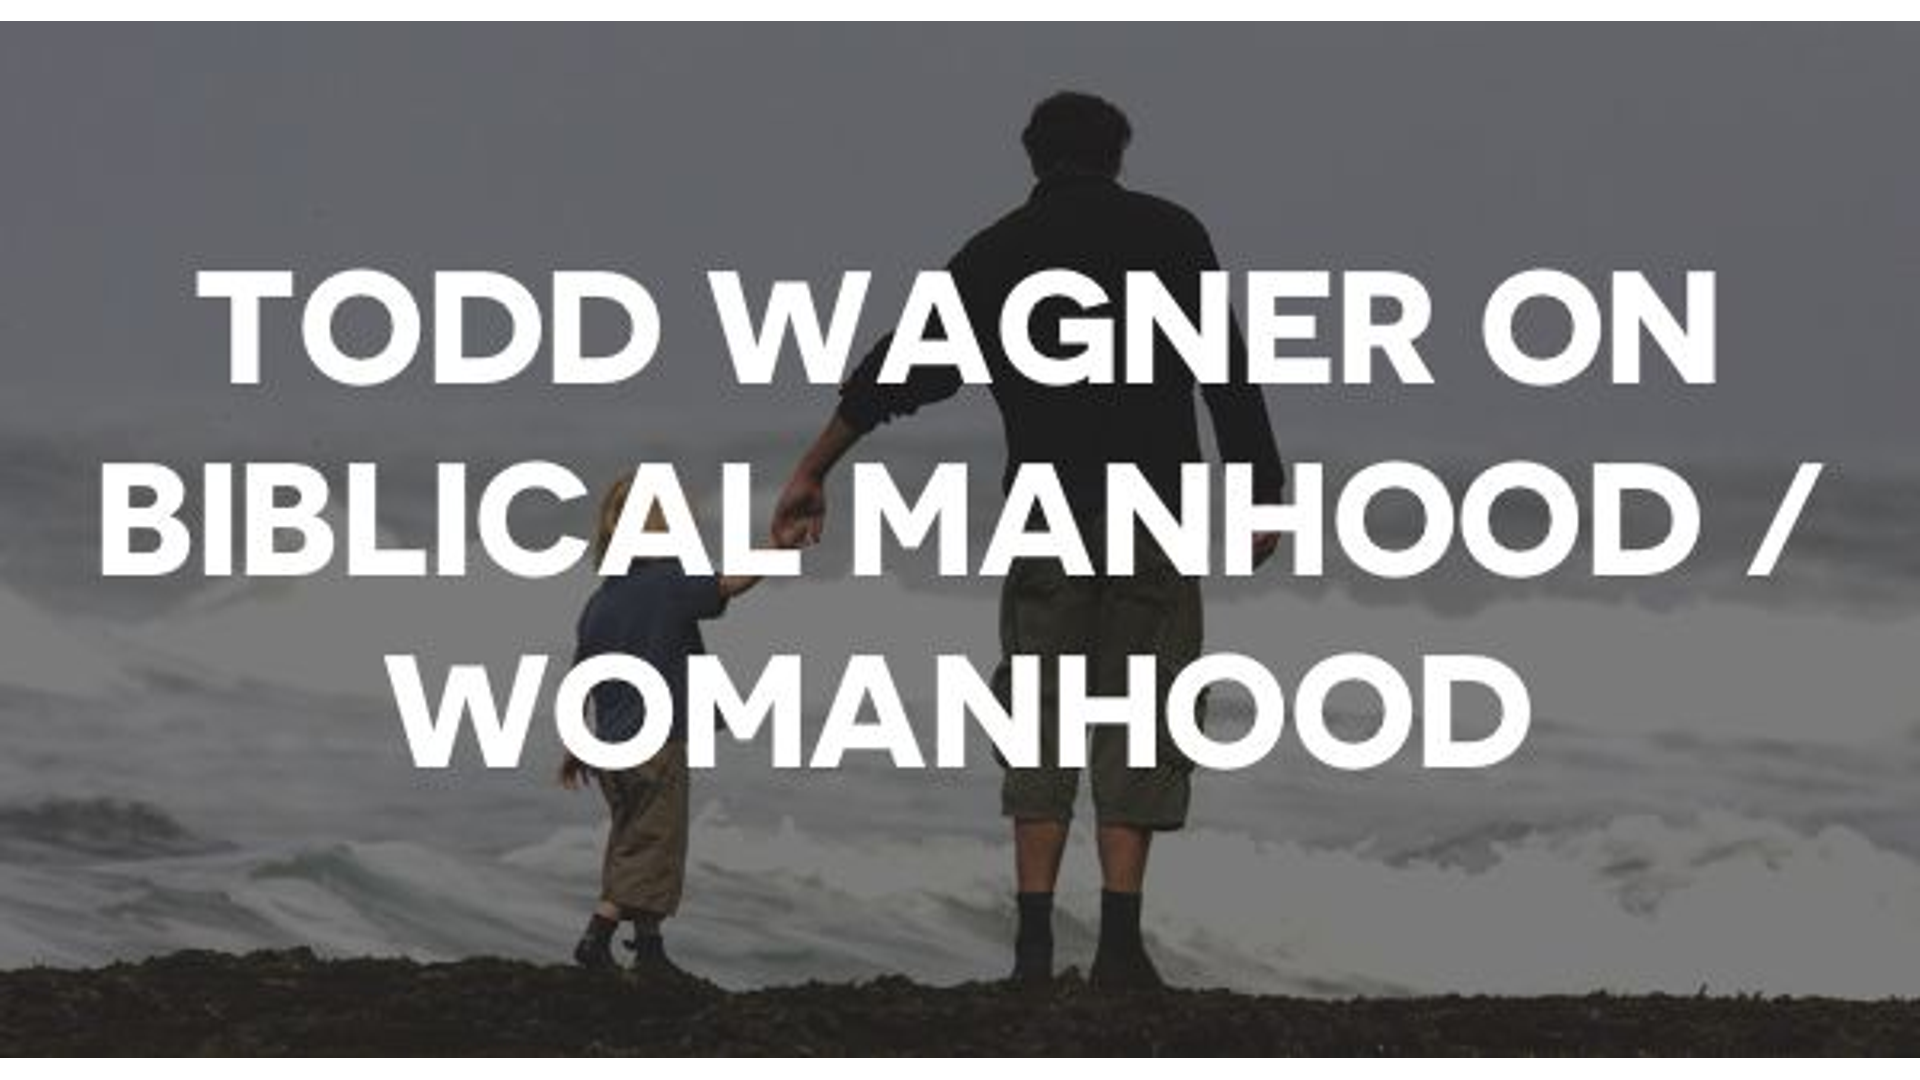 Todd Wagner Speaks With Family Life Radio On Biblical Manhood / Womanhood Hero Image